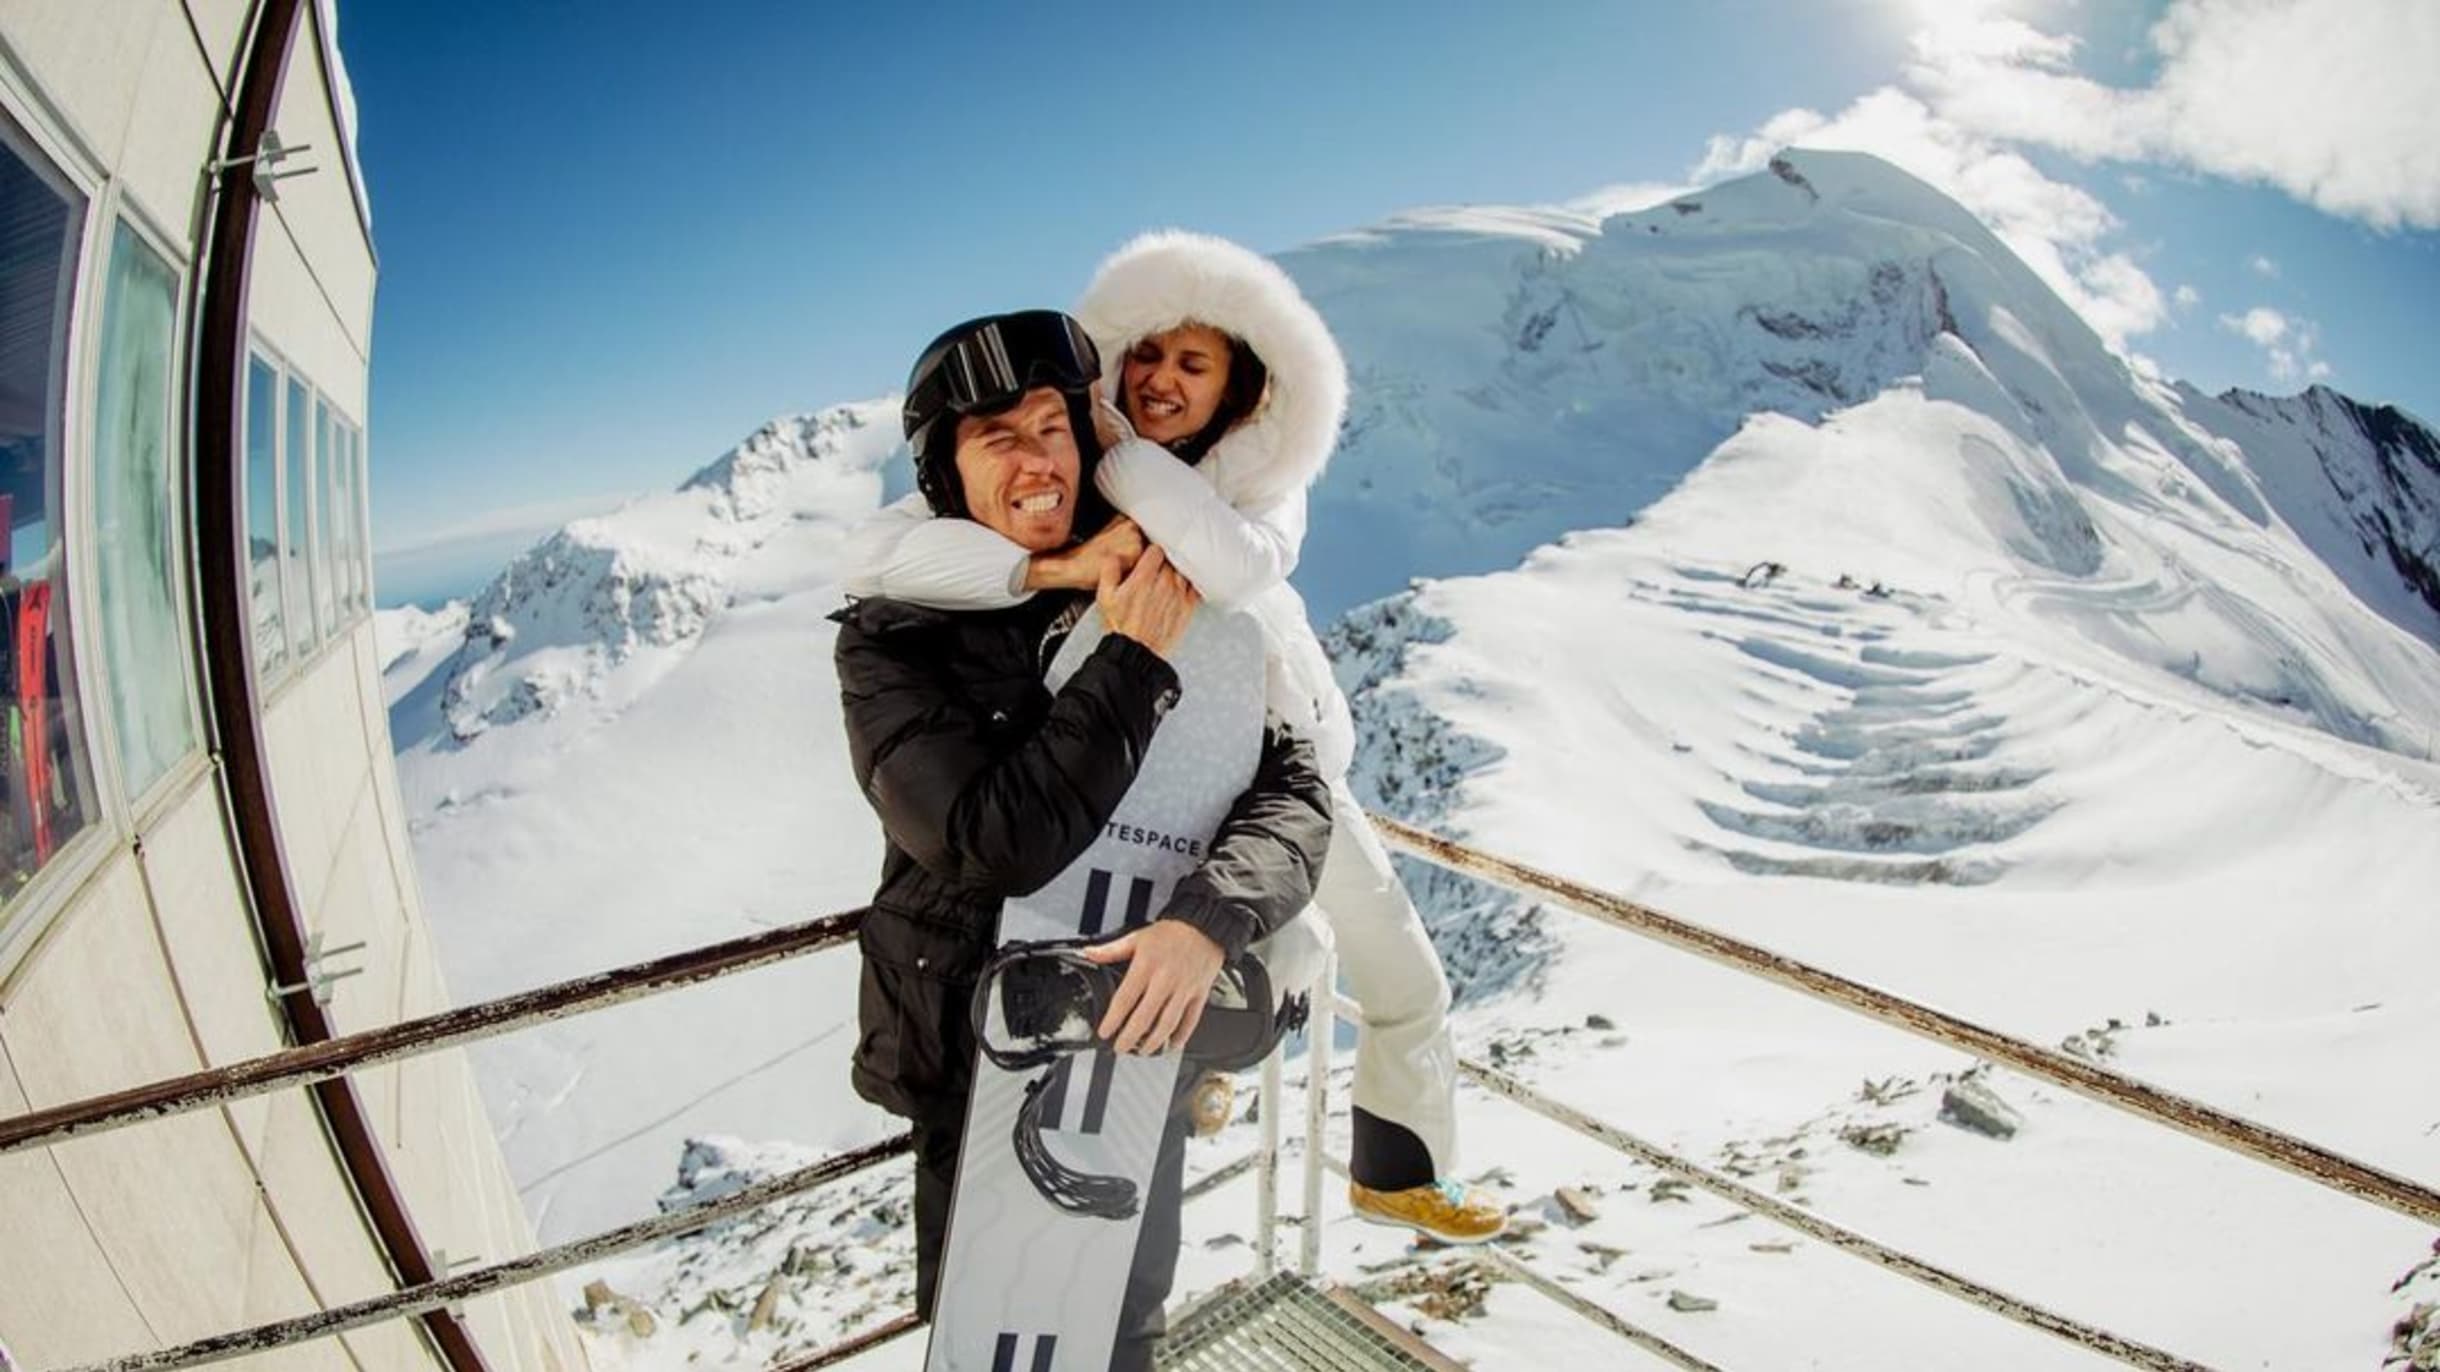 Olympic snowboarder Shaun White and actress Nina Dobrev were